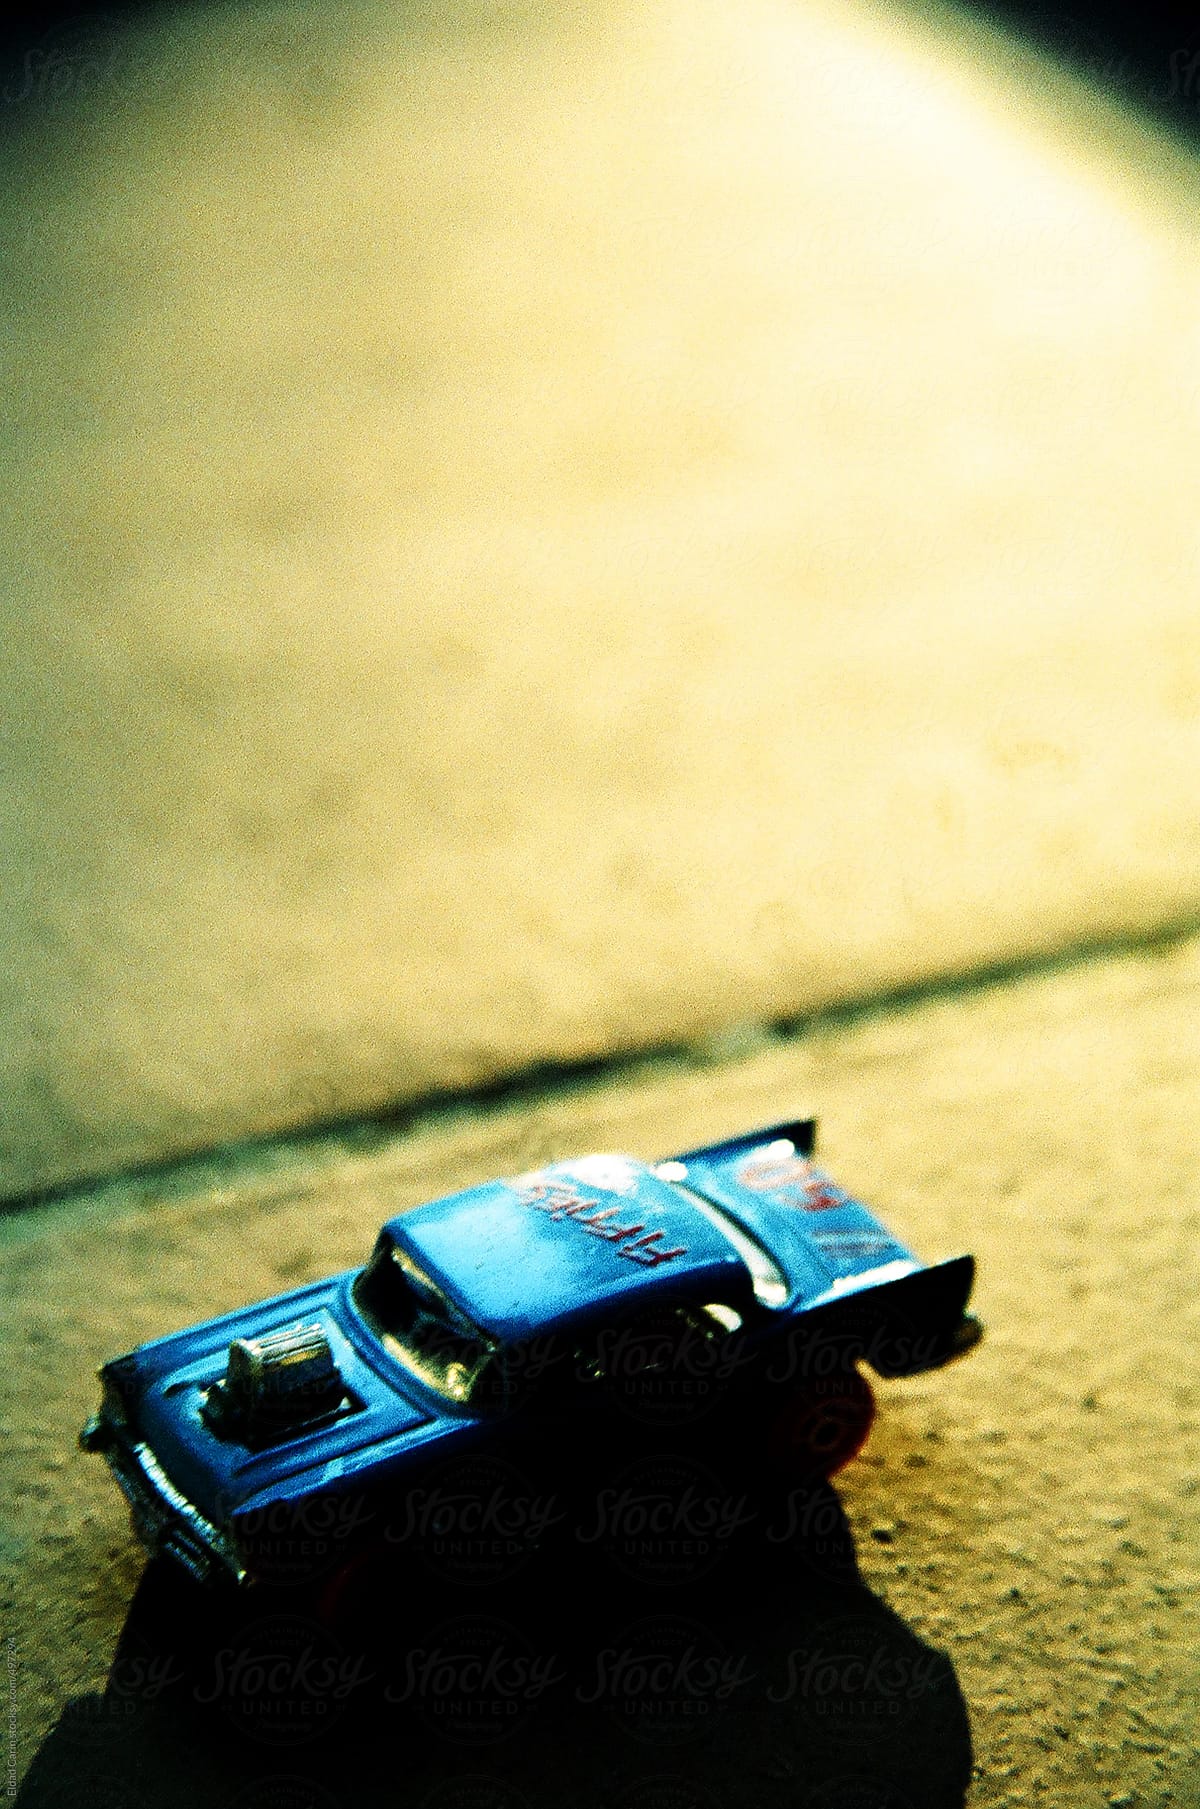 Fifties Toy Car at Dusk